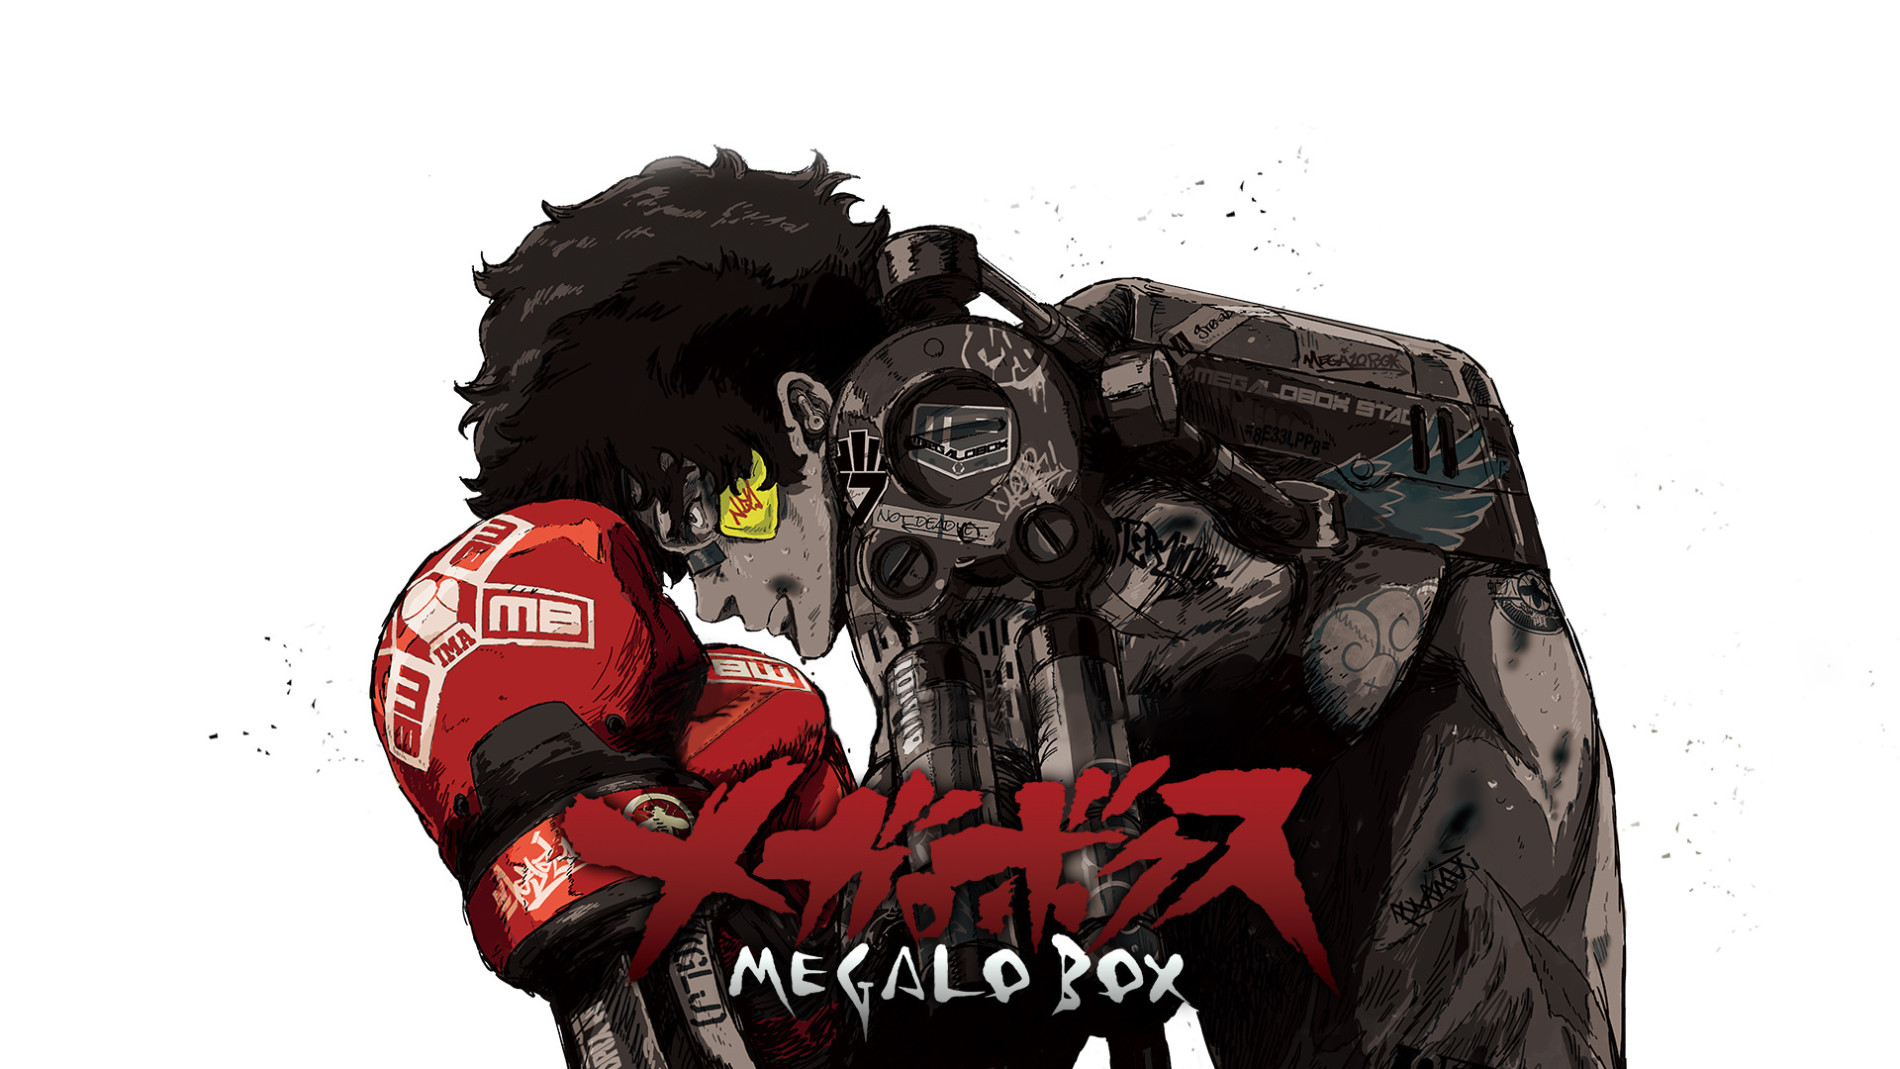 Banner for Megalobox